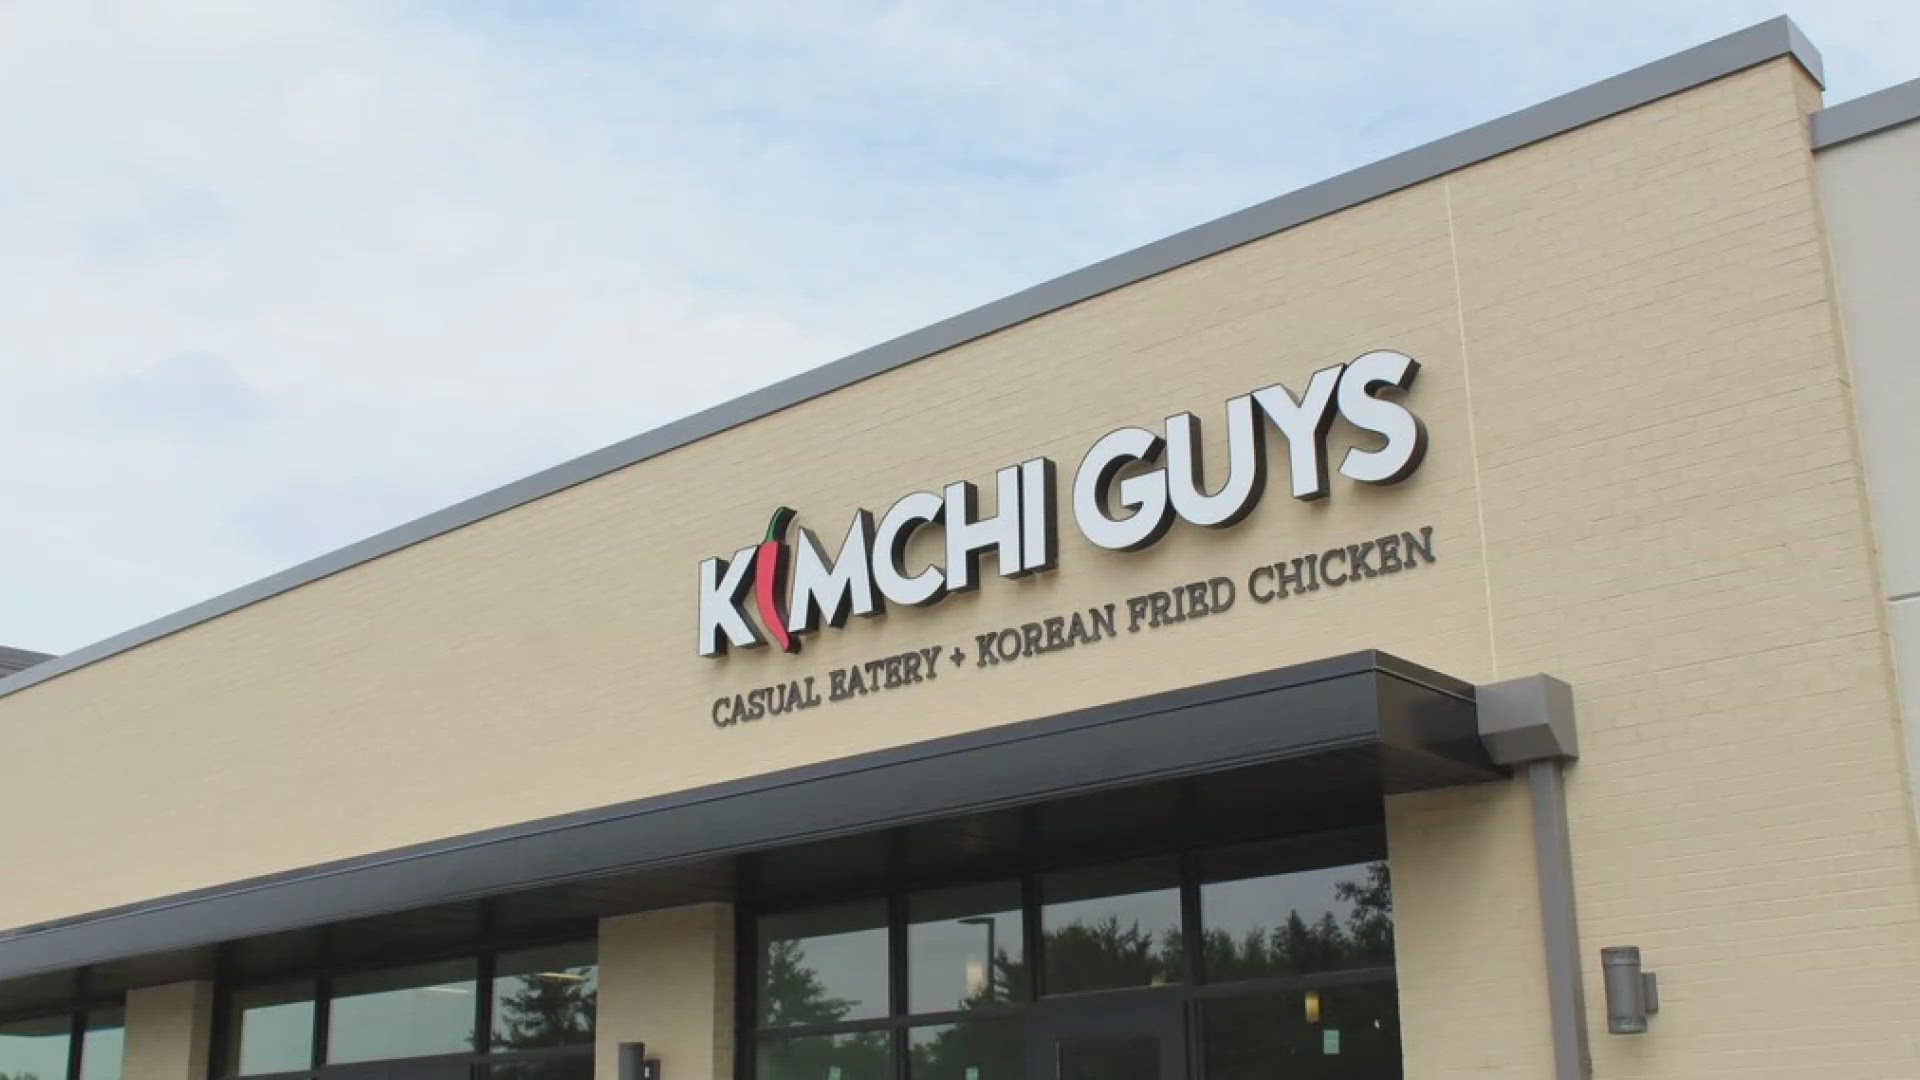 Two popular Asian cuisine restaurants are opening in Edwardsville. Kimchi Guys will open July 21. Drunken Fish will open Aug. 3.